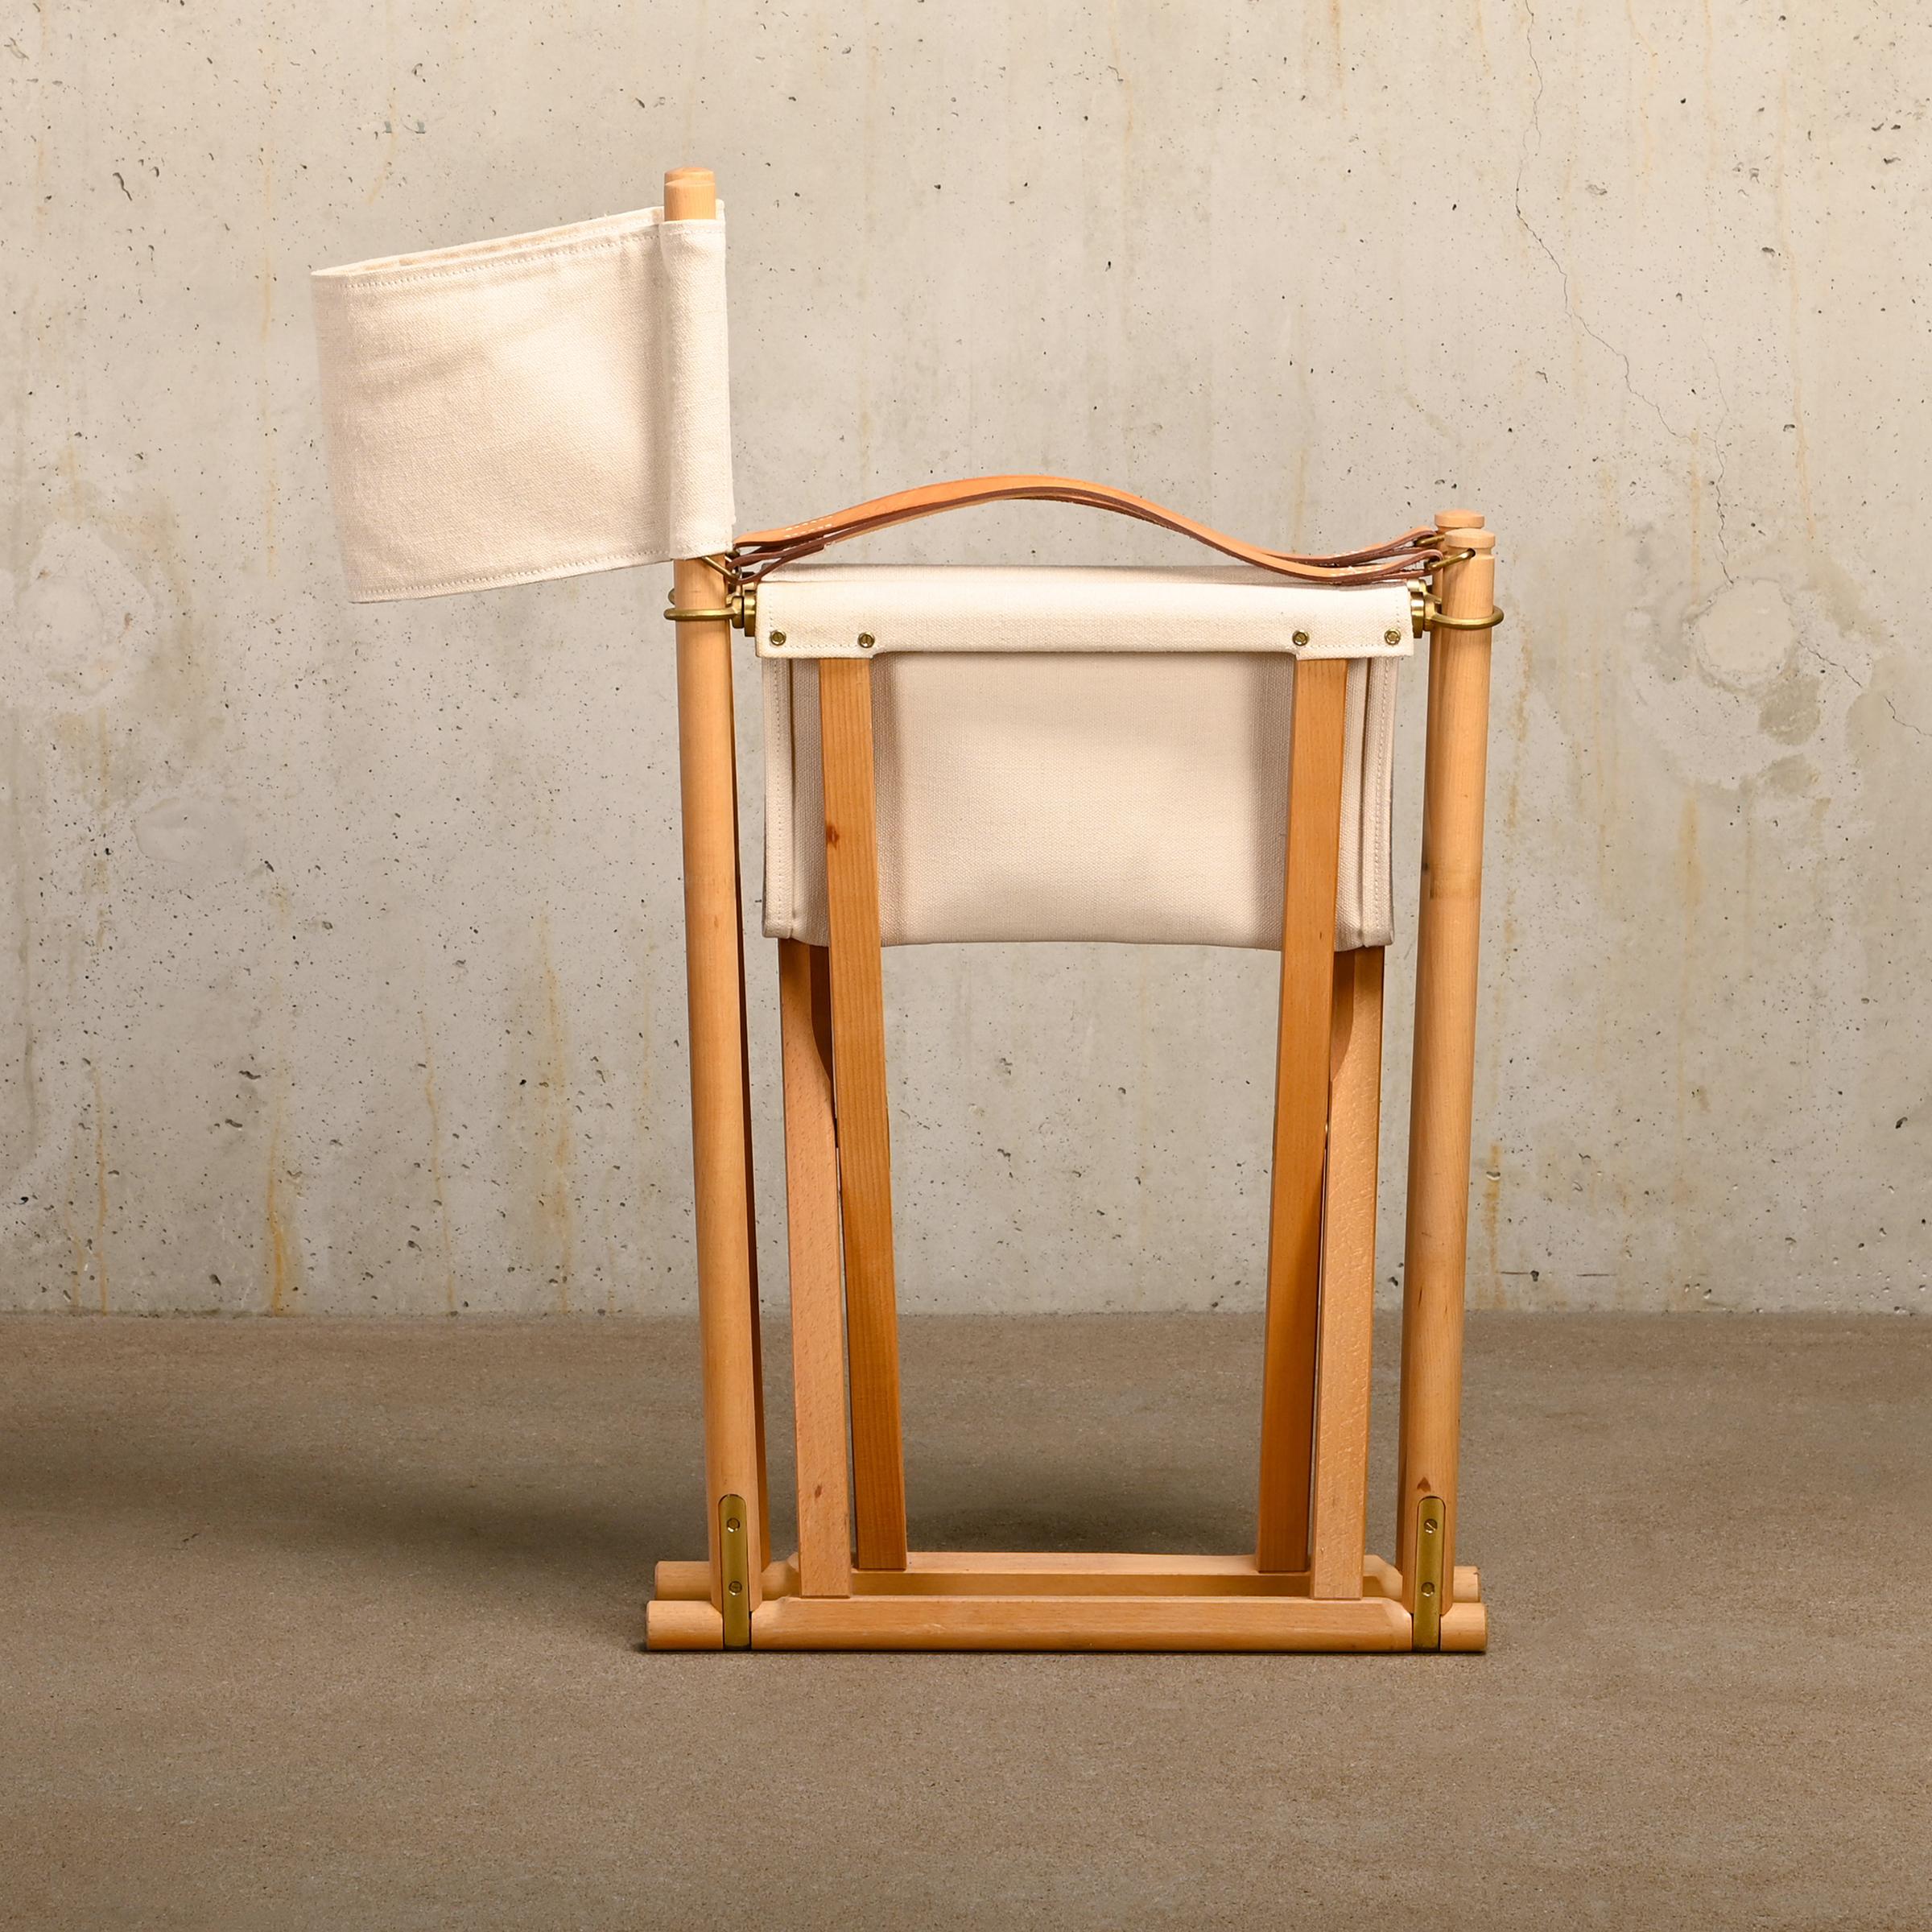 Mogens Koch MK16 Folding Chair in Beech Wood and Canvas for Rud Rasmussen, DK 2